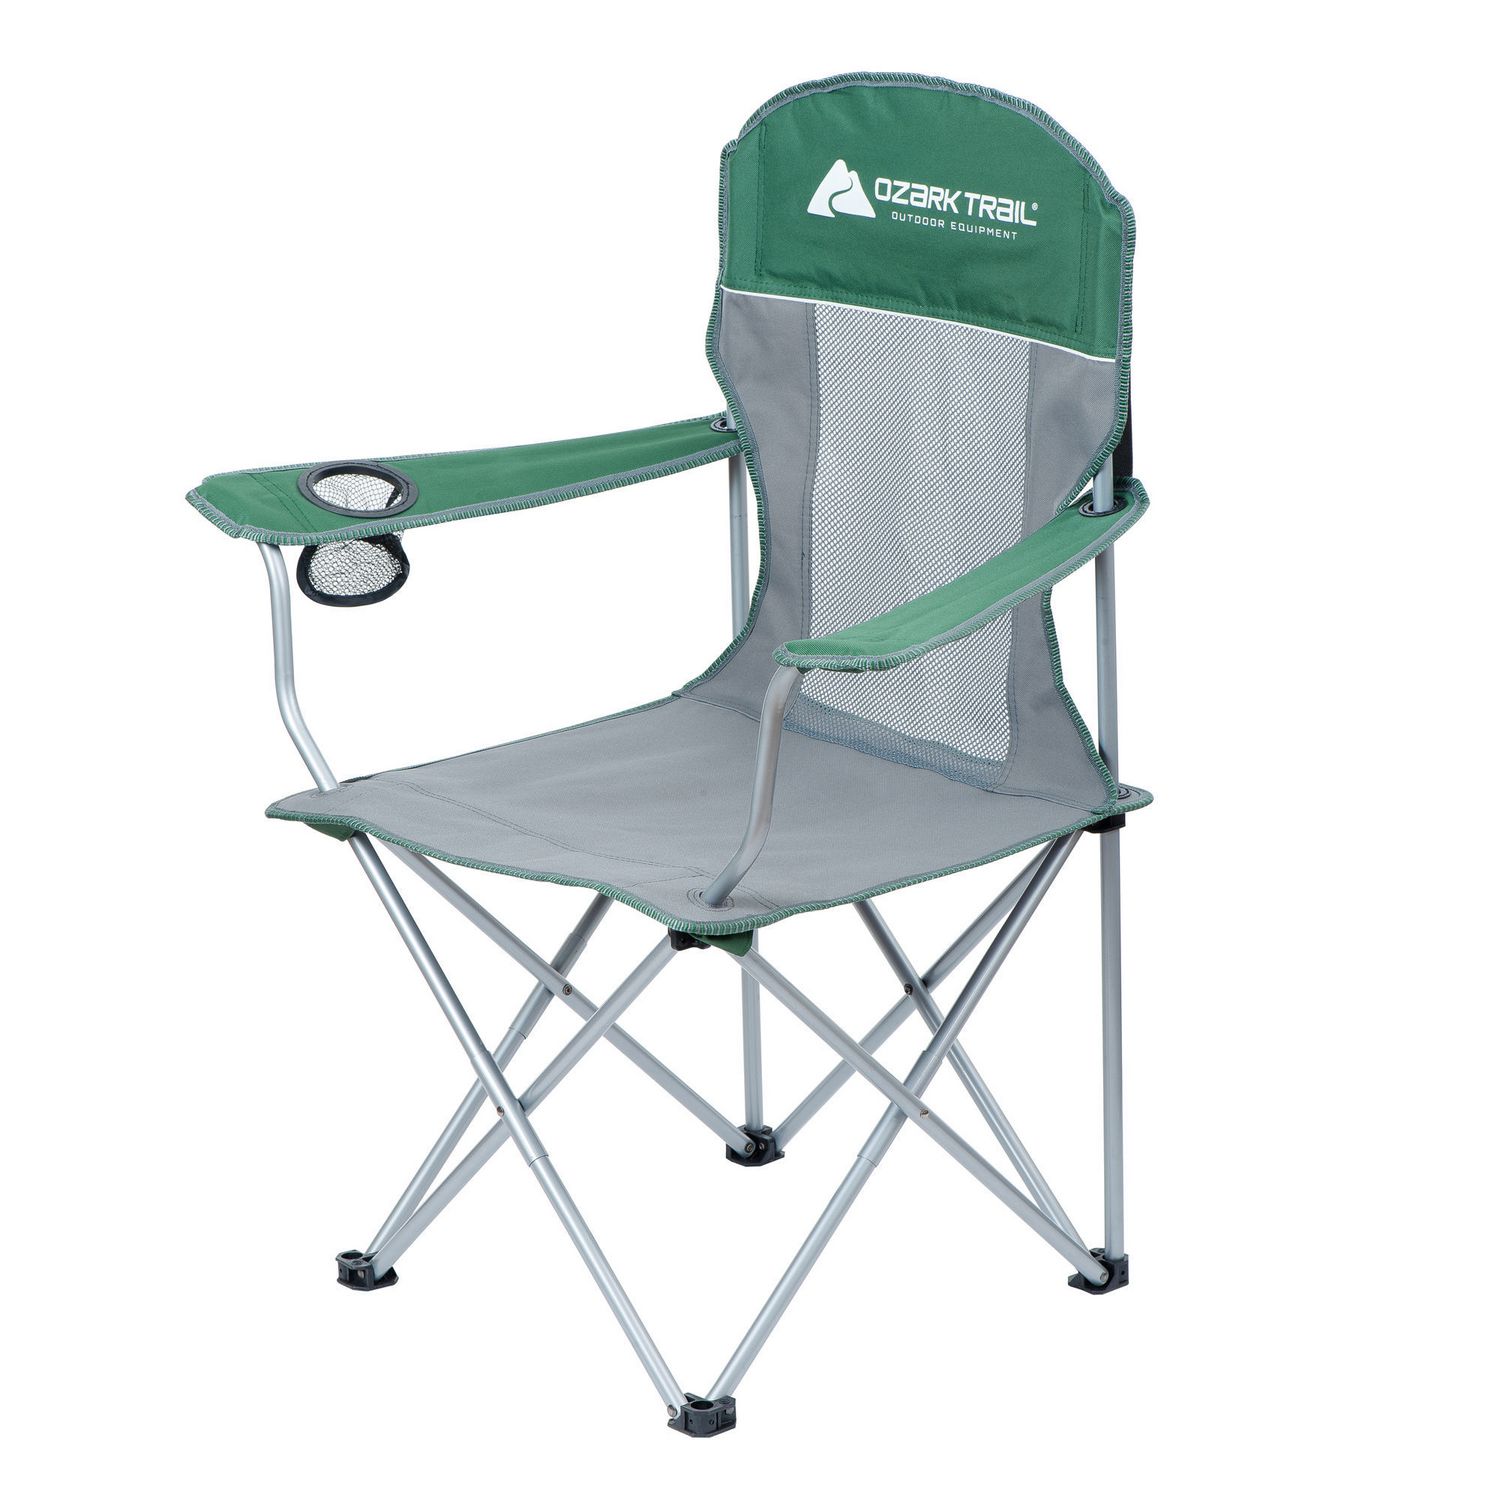 Ozark Trail Comfort Mesh Chair 